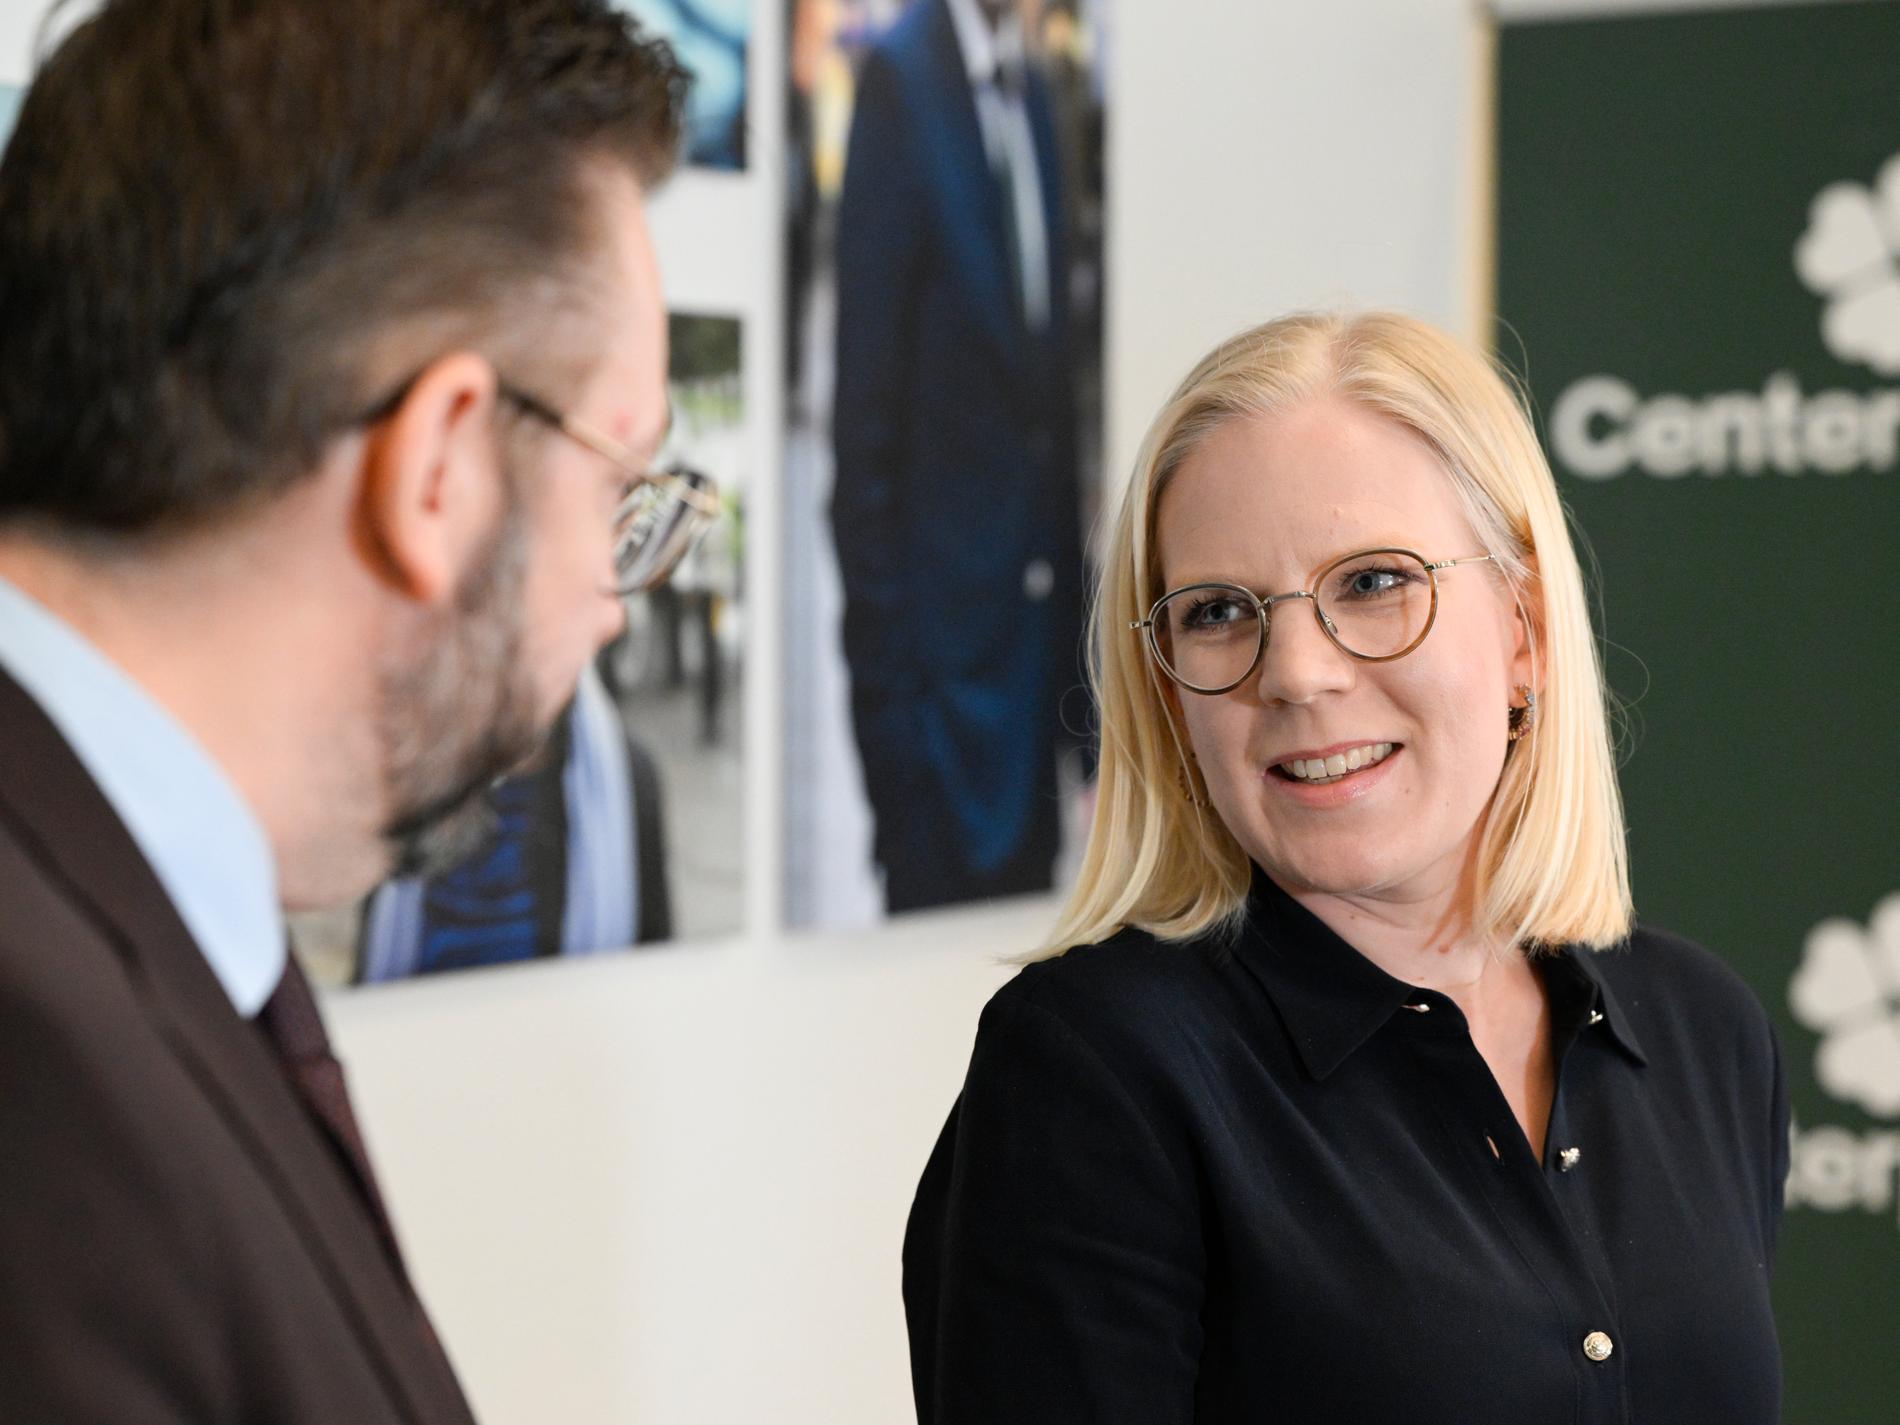 Karin Ernlund ny partisekreterare i C